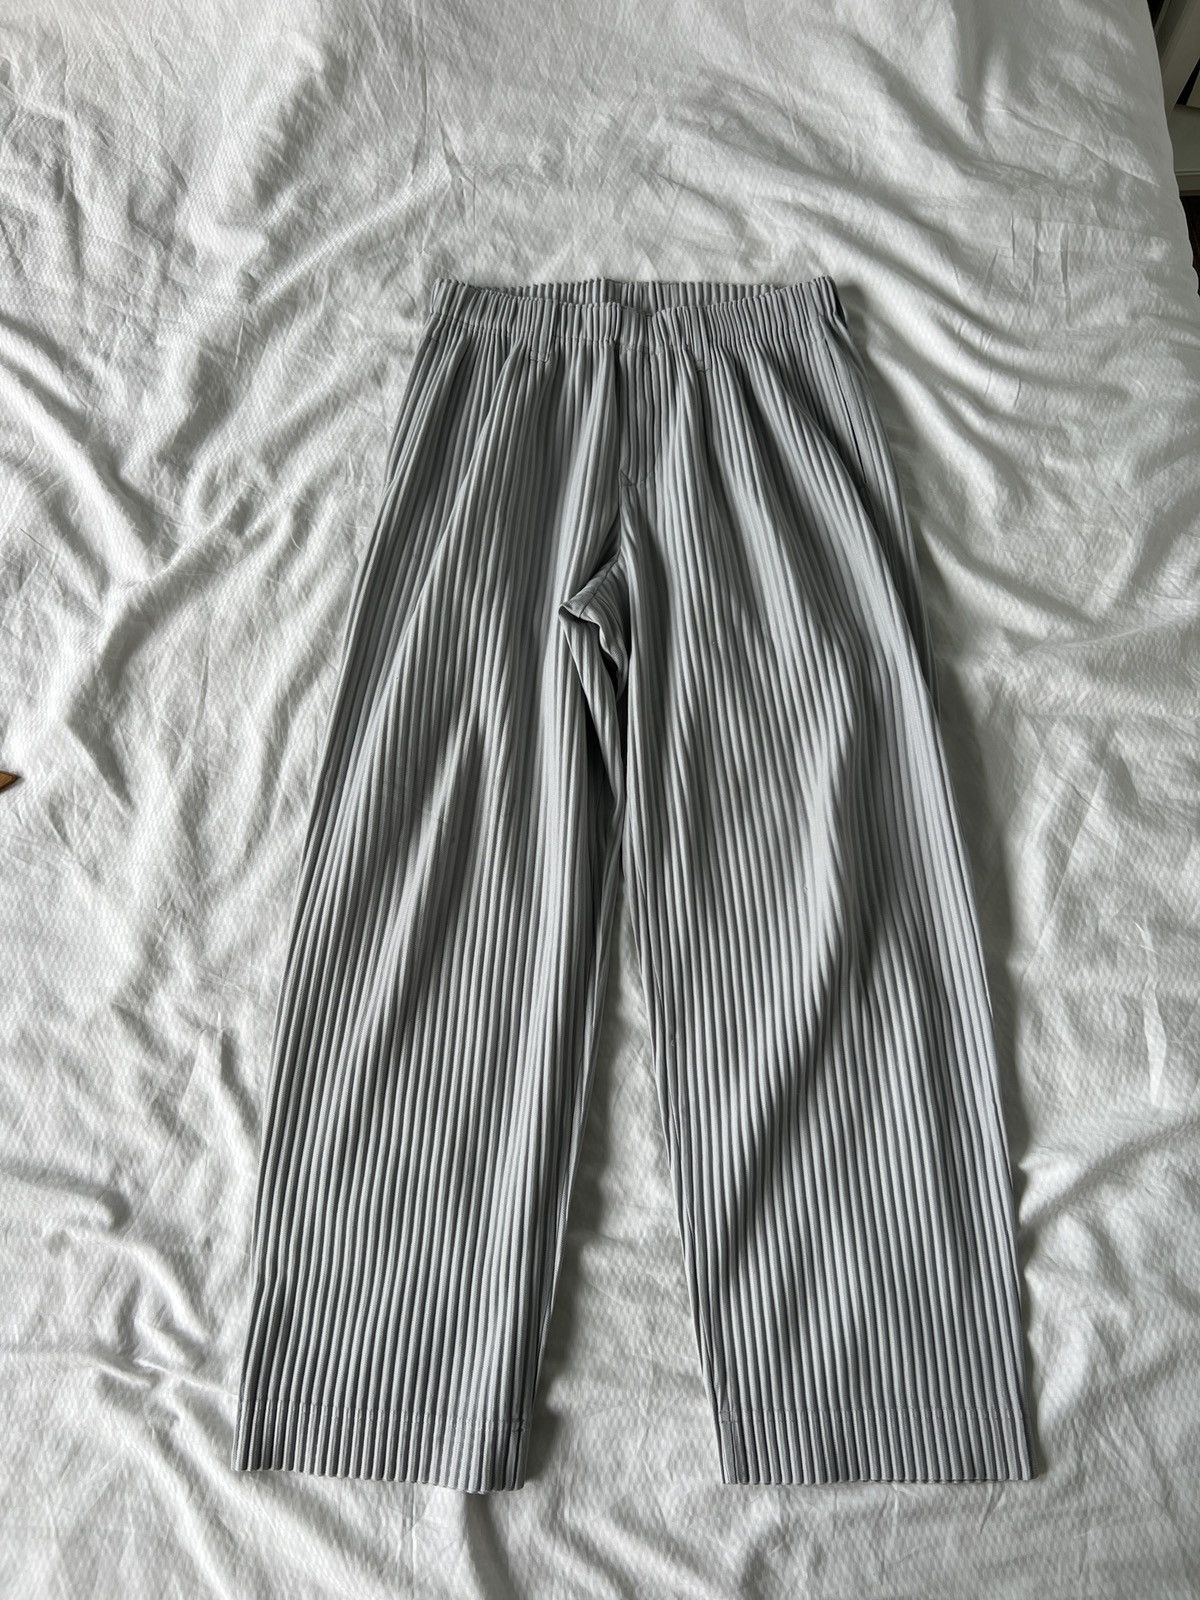 Homme Plisse Issey Miyake Homme Plisse Grey JF150 pants | Grailed